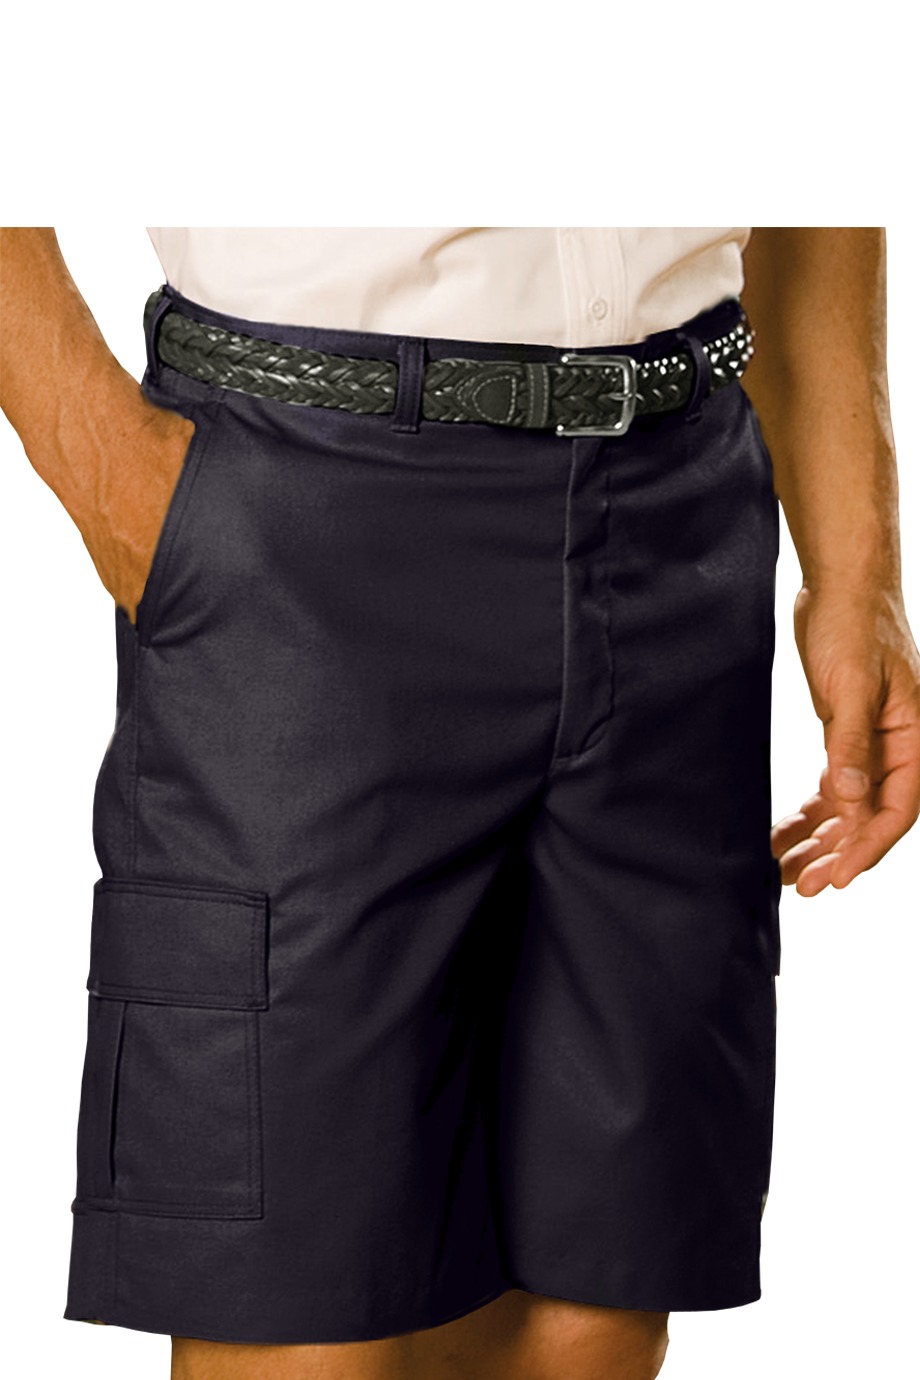 Edwards Garment 2468 - Men's Utility Cargo Short